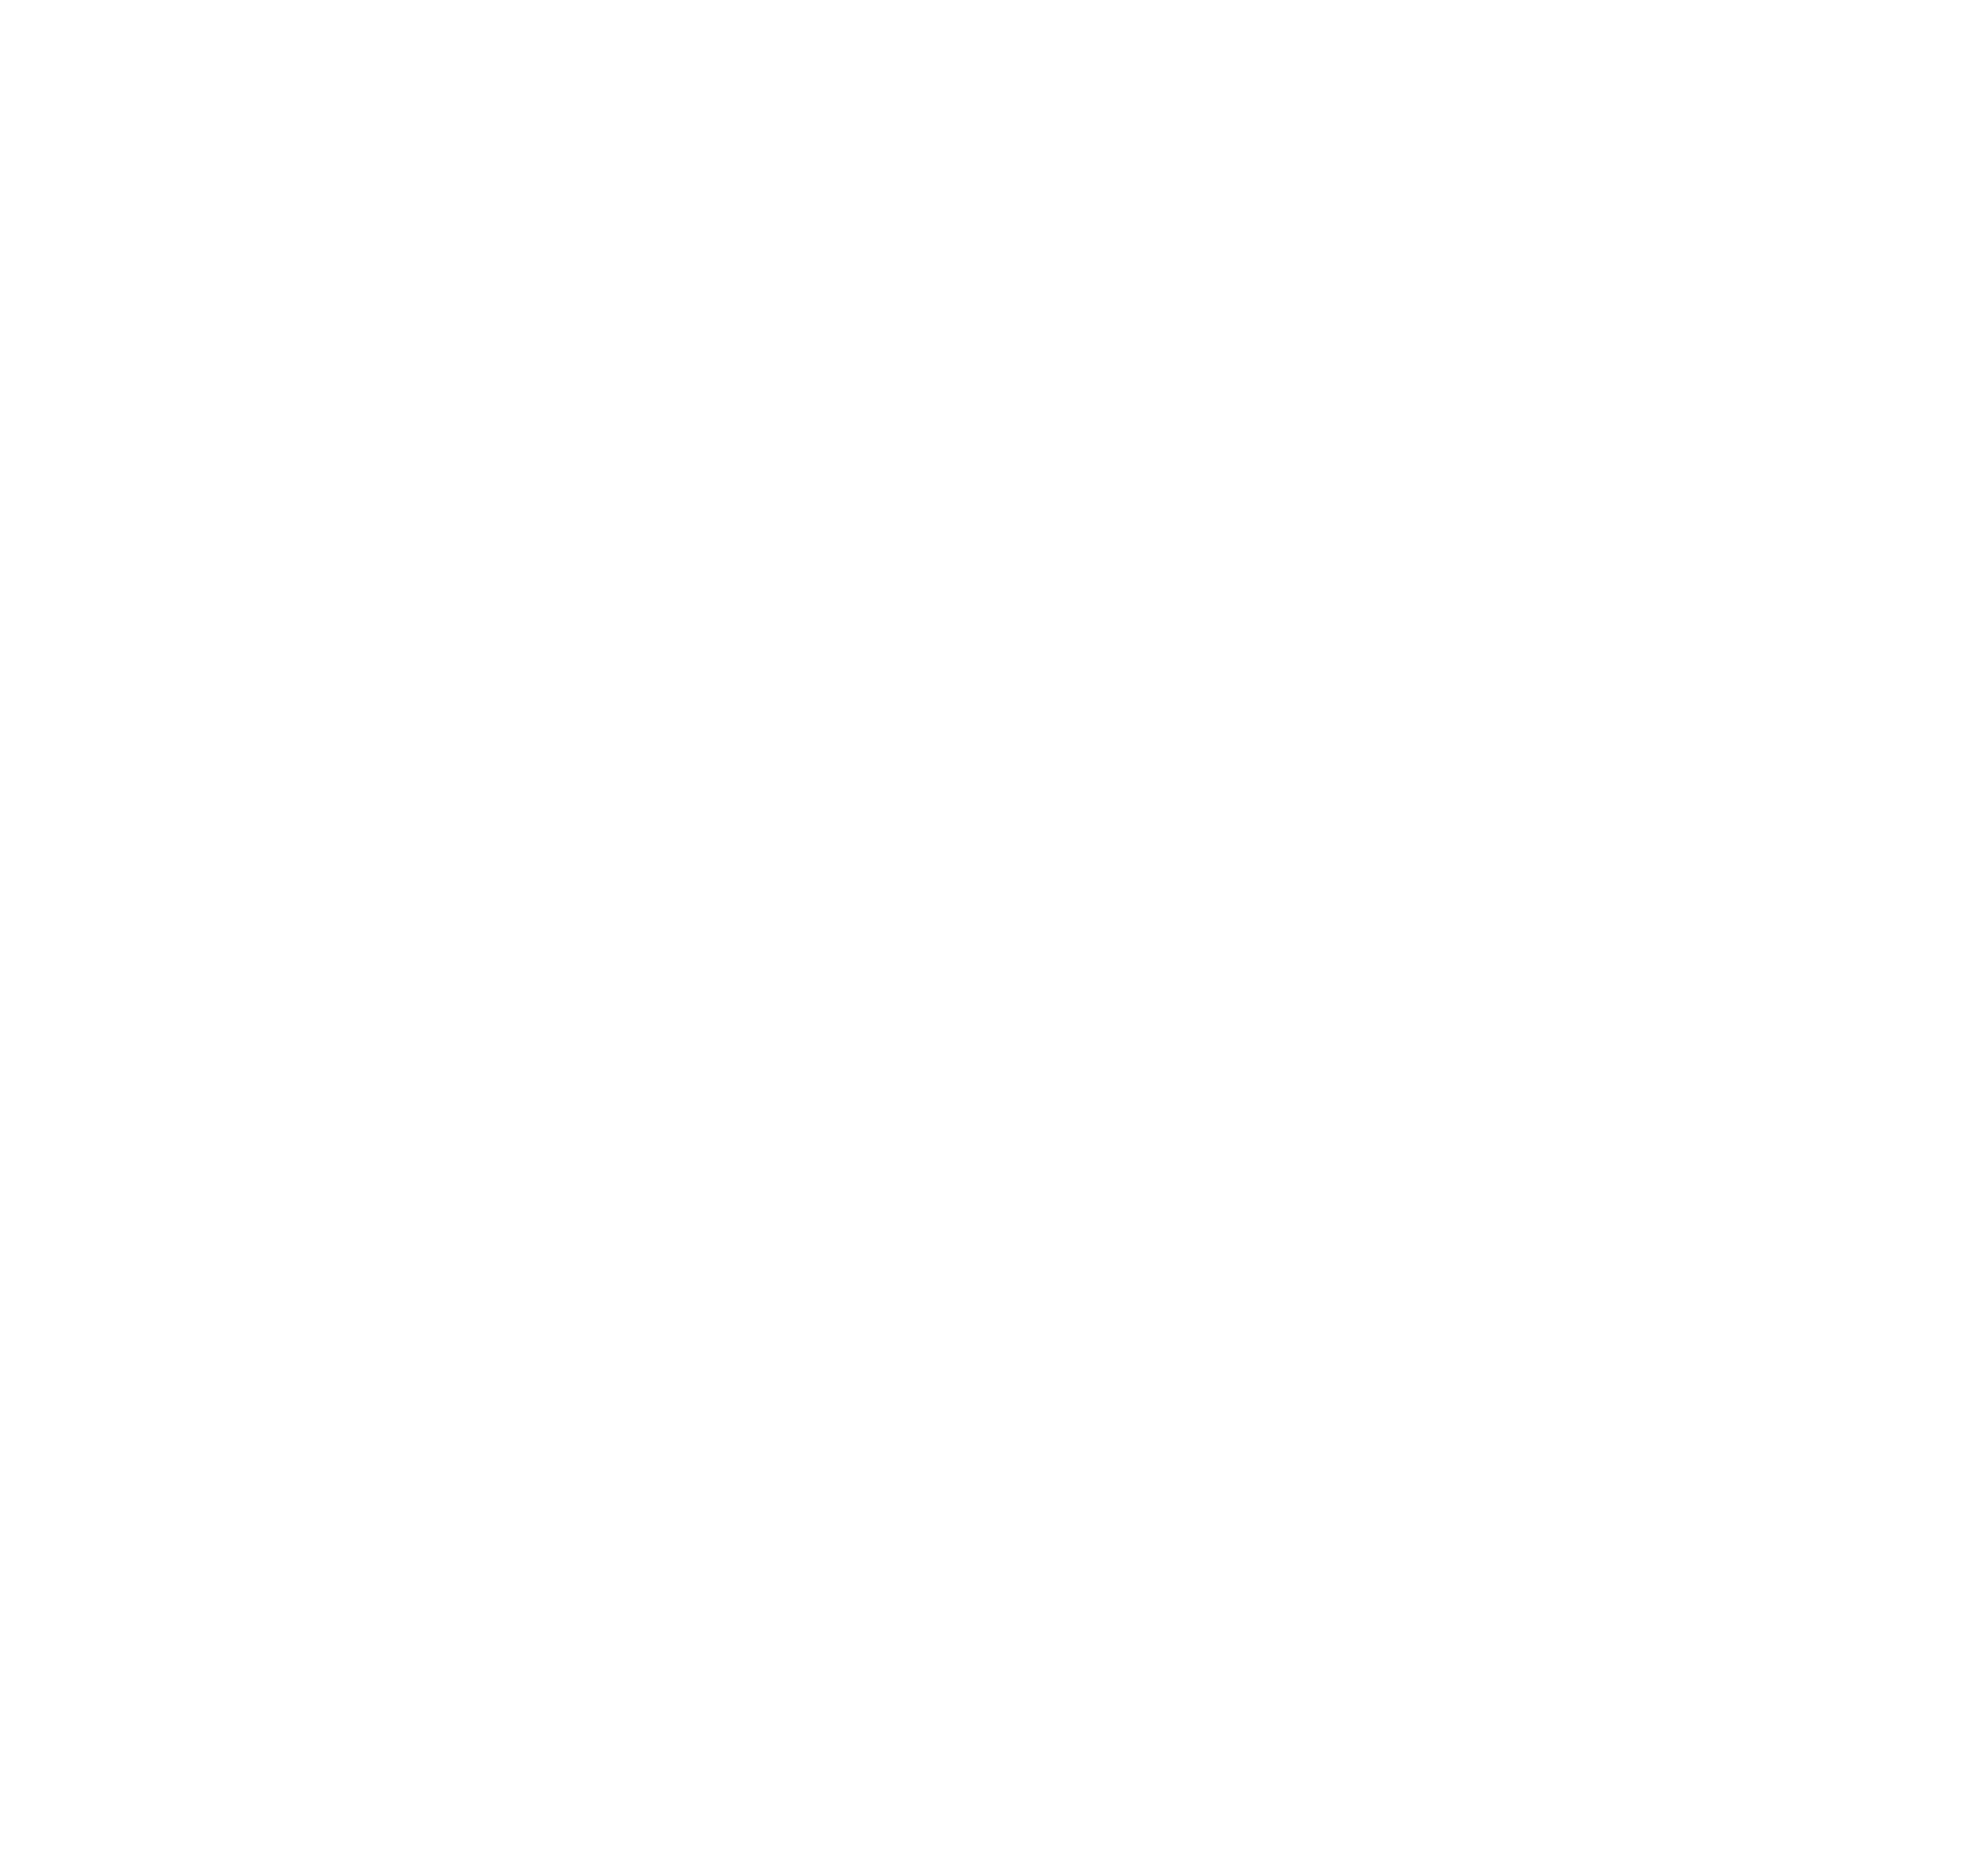 Furst Class Fungi